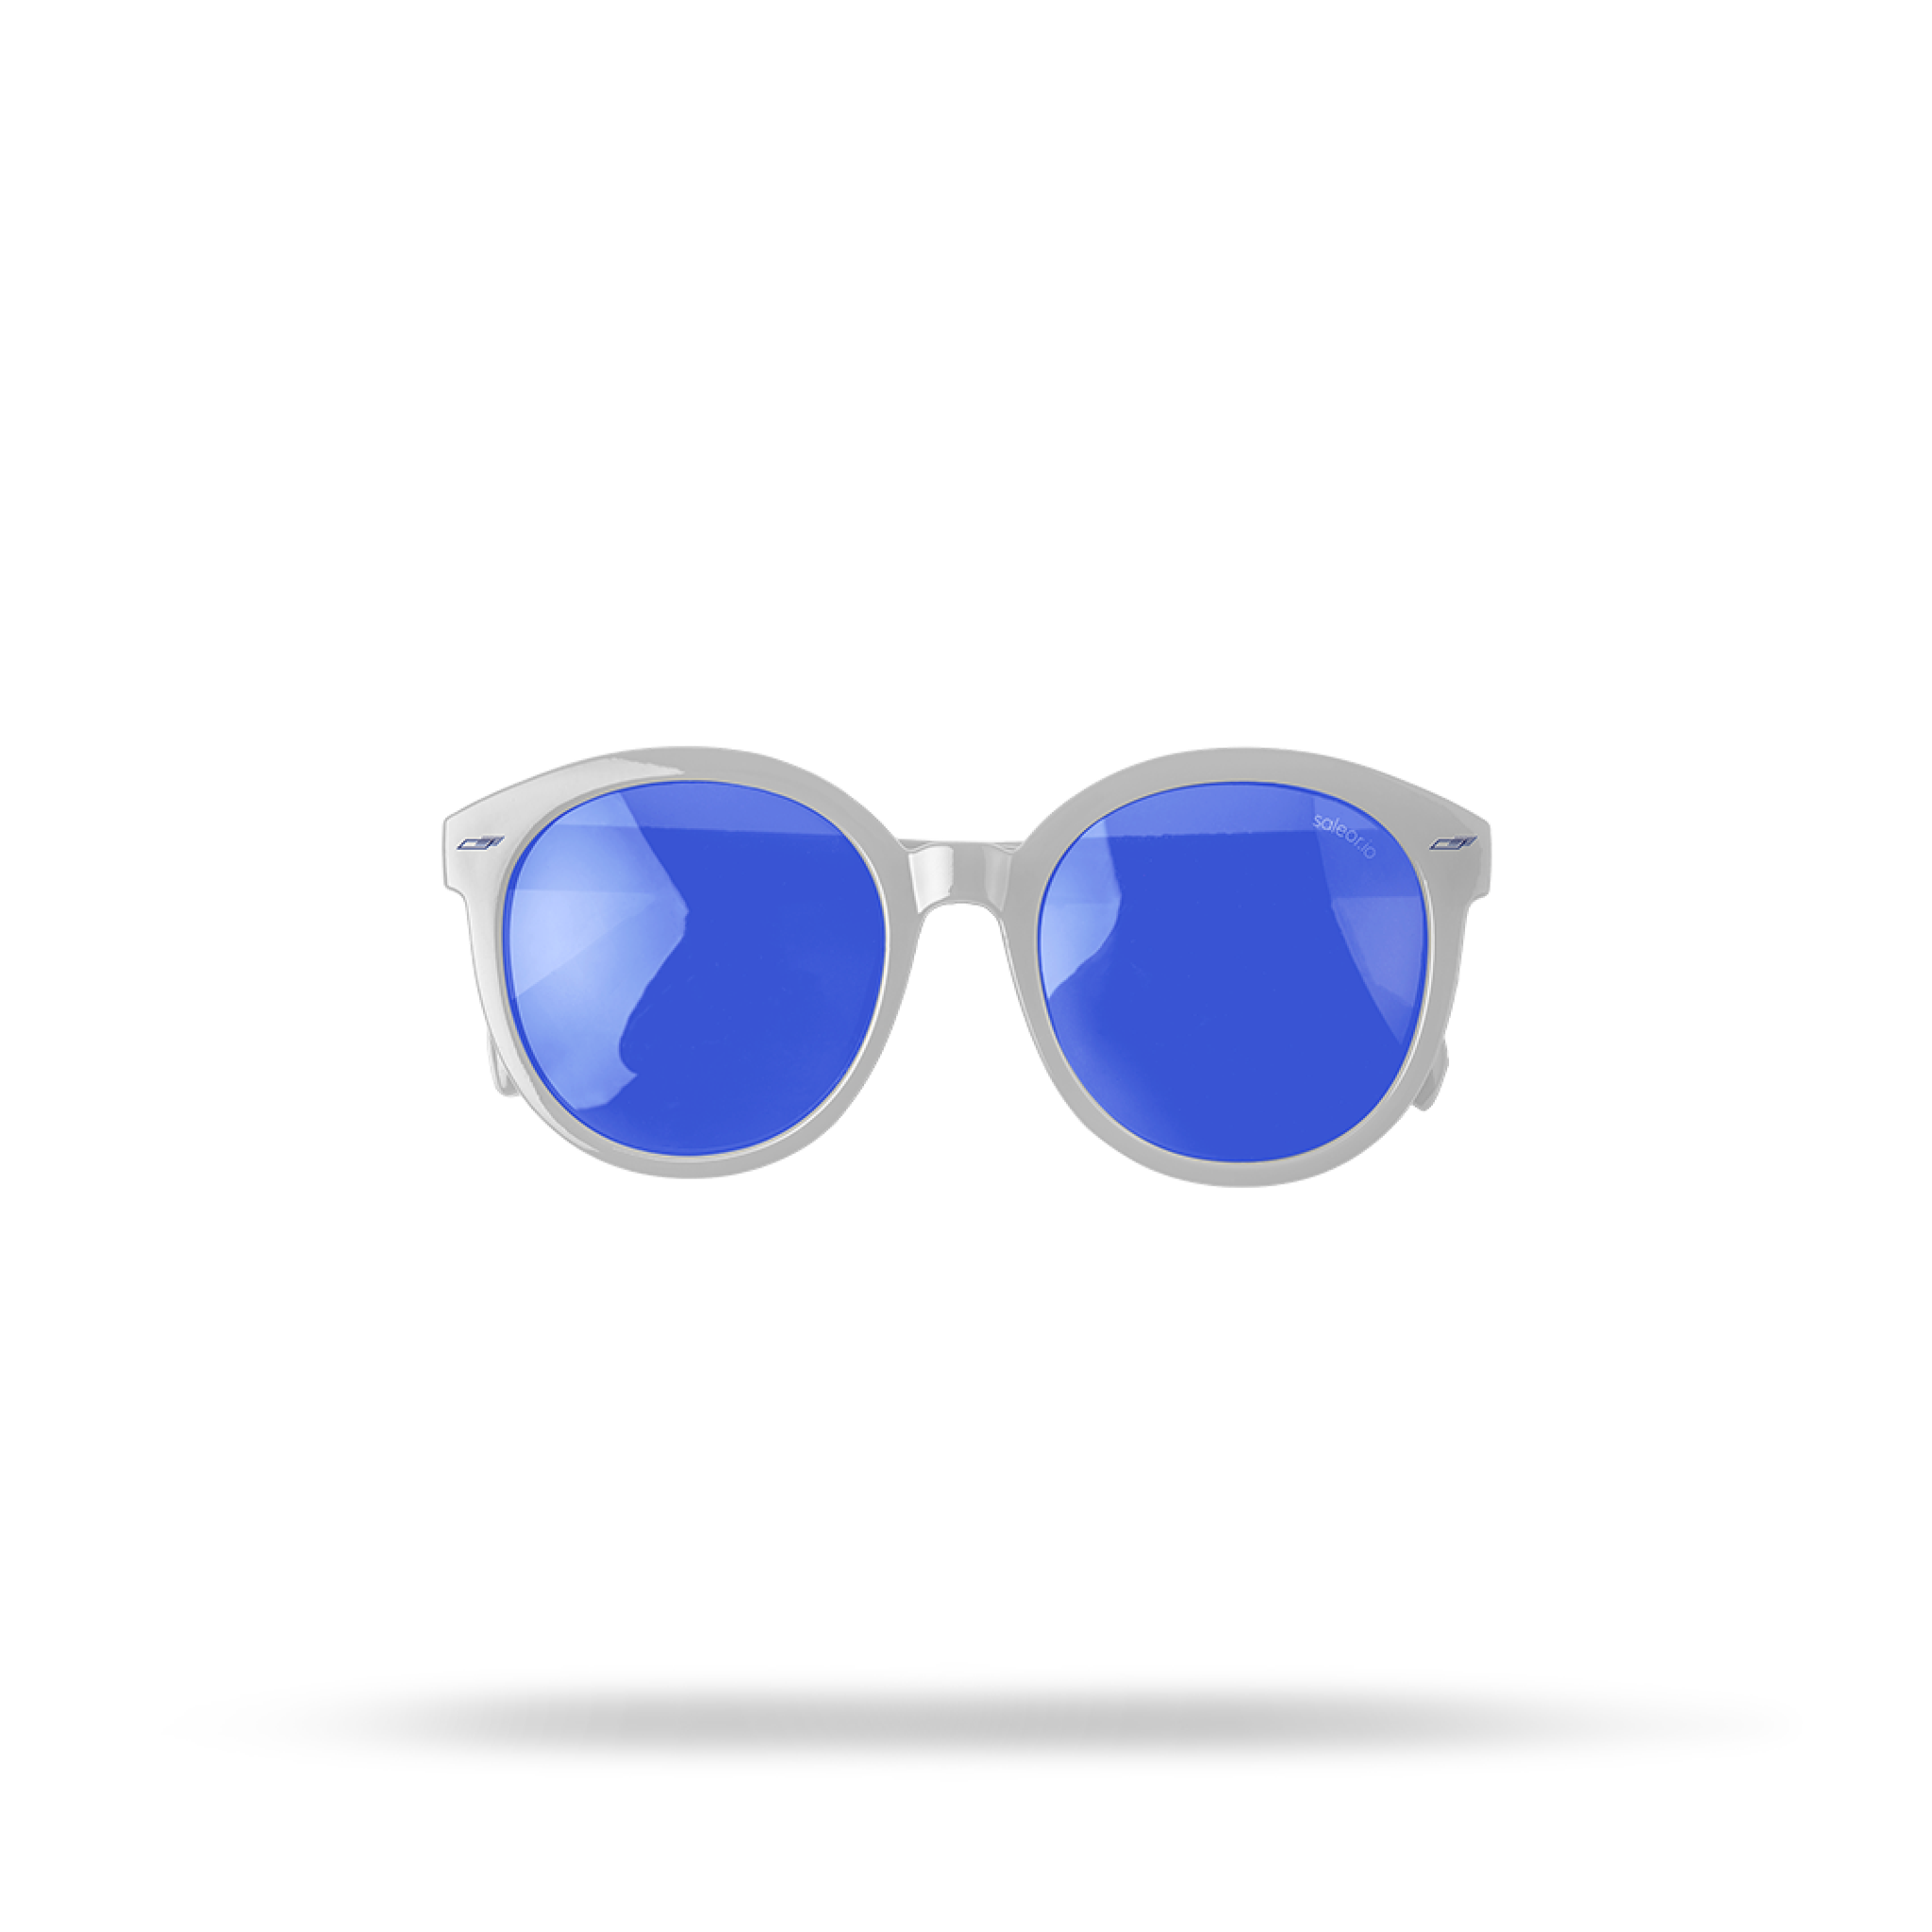 Saleor White Sunglasses